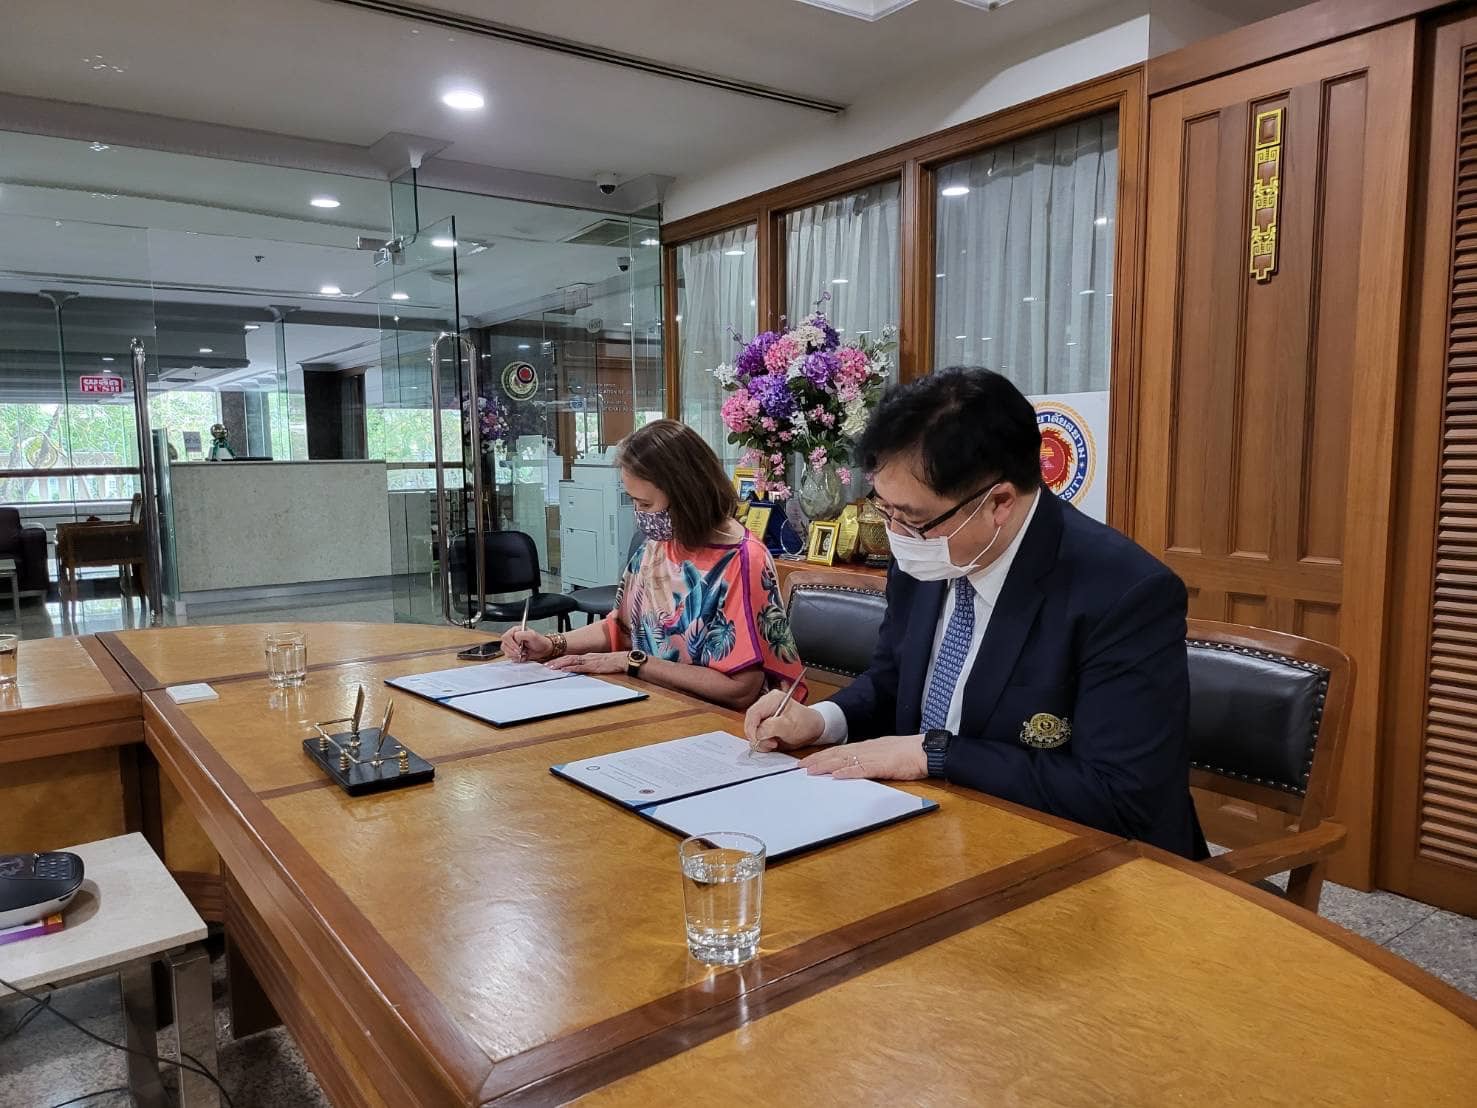 MoU Renewal Signing between AIUB and Siam University